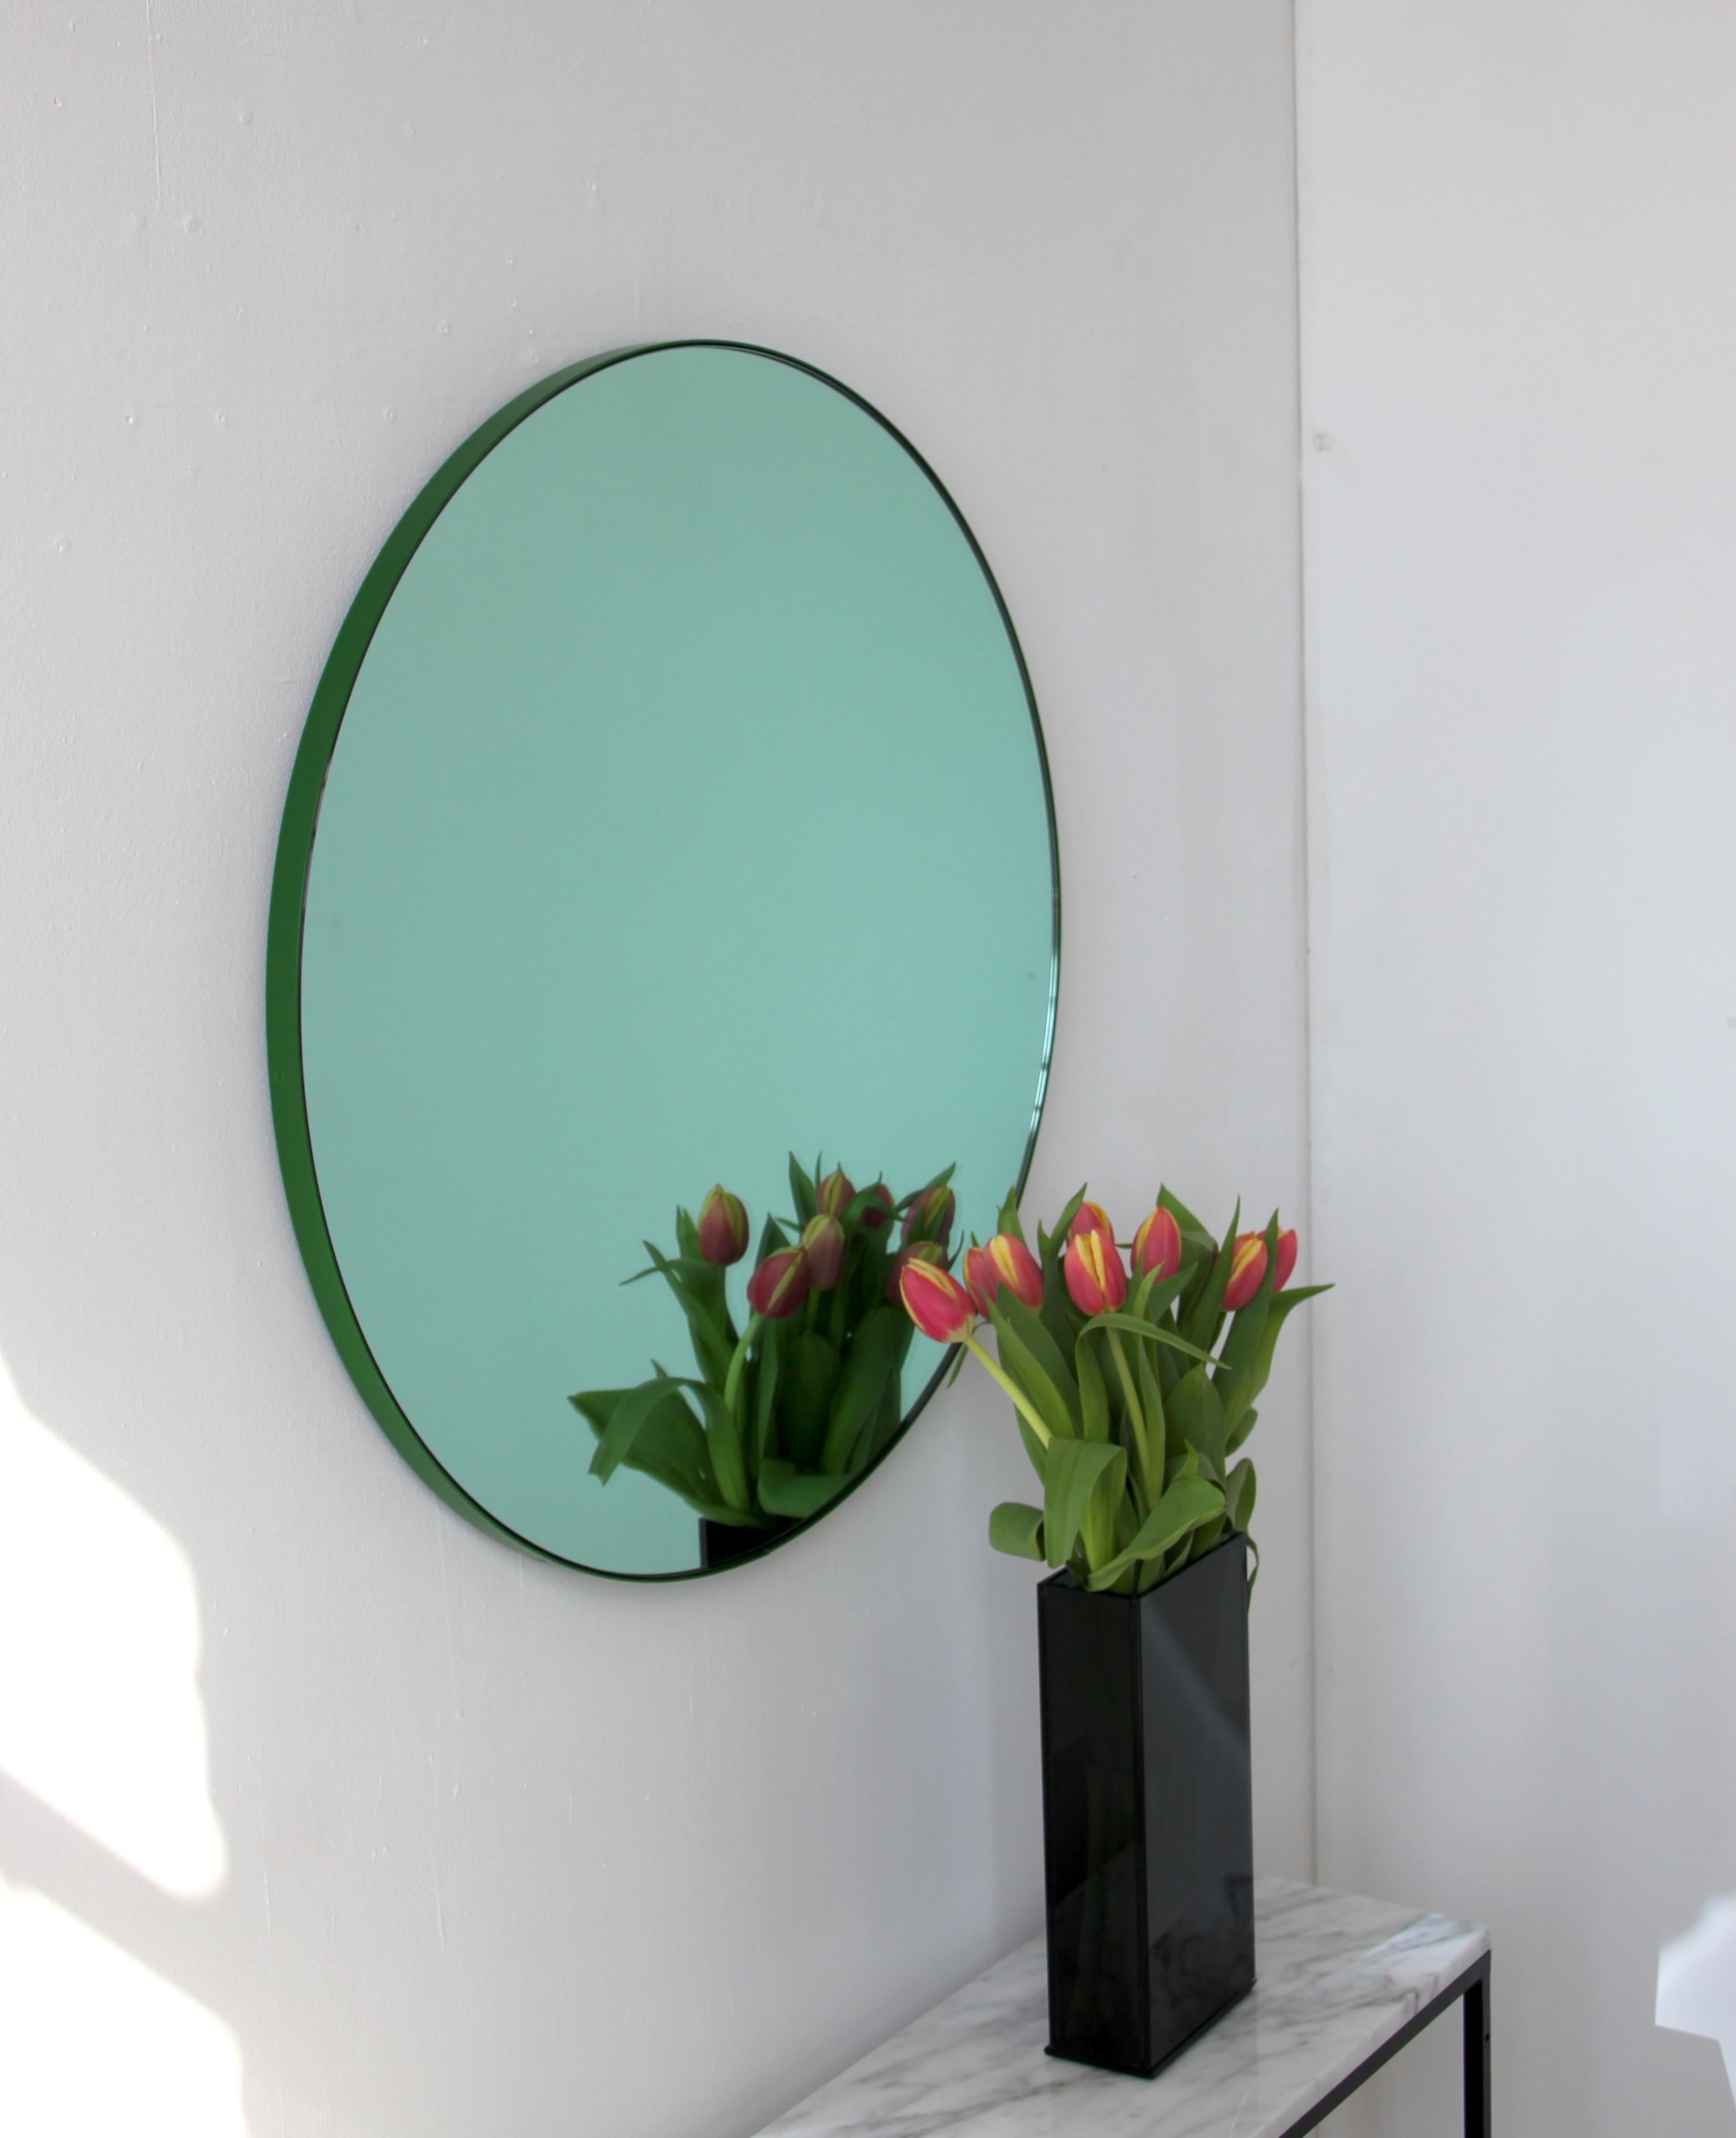 British Orbis™ Green Tinted Modern Round Mirror with Green Frame - Oversized